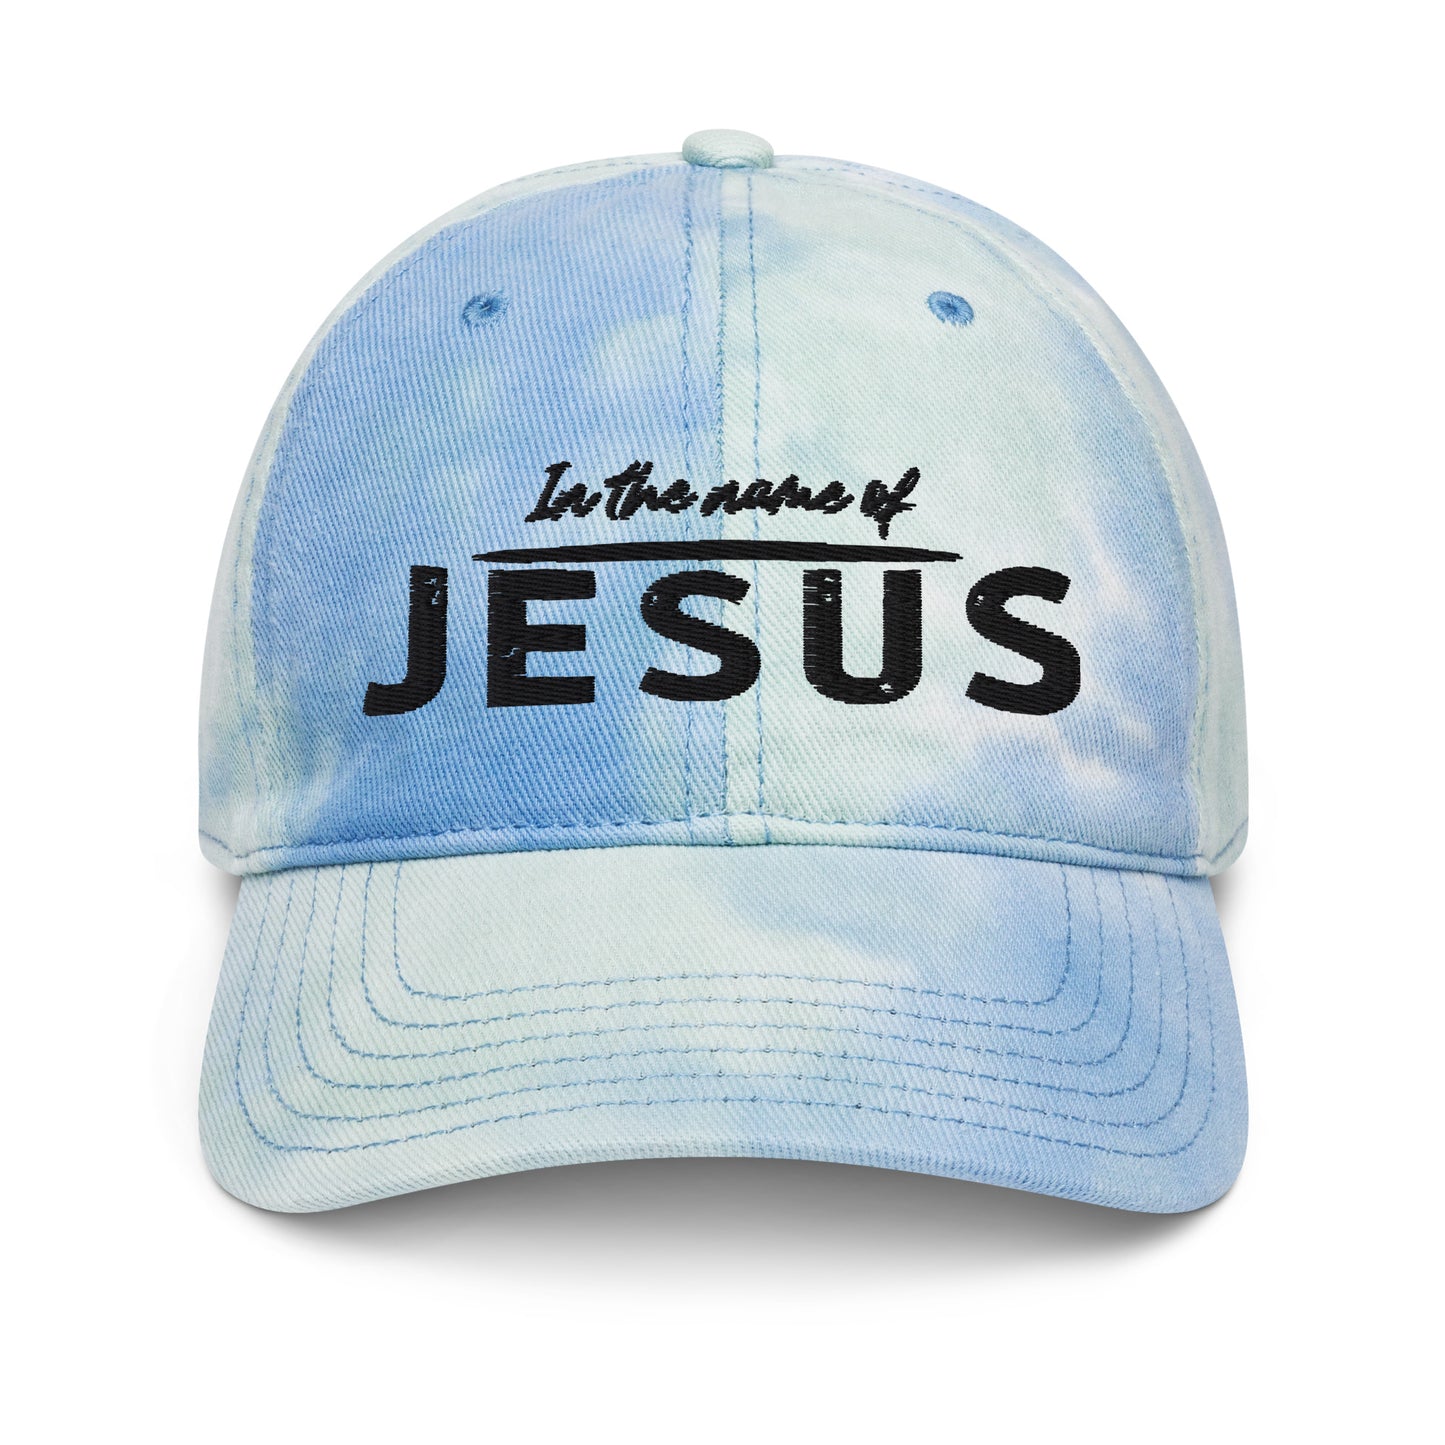 "In The Name Of Jesus" Tie dye hat